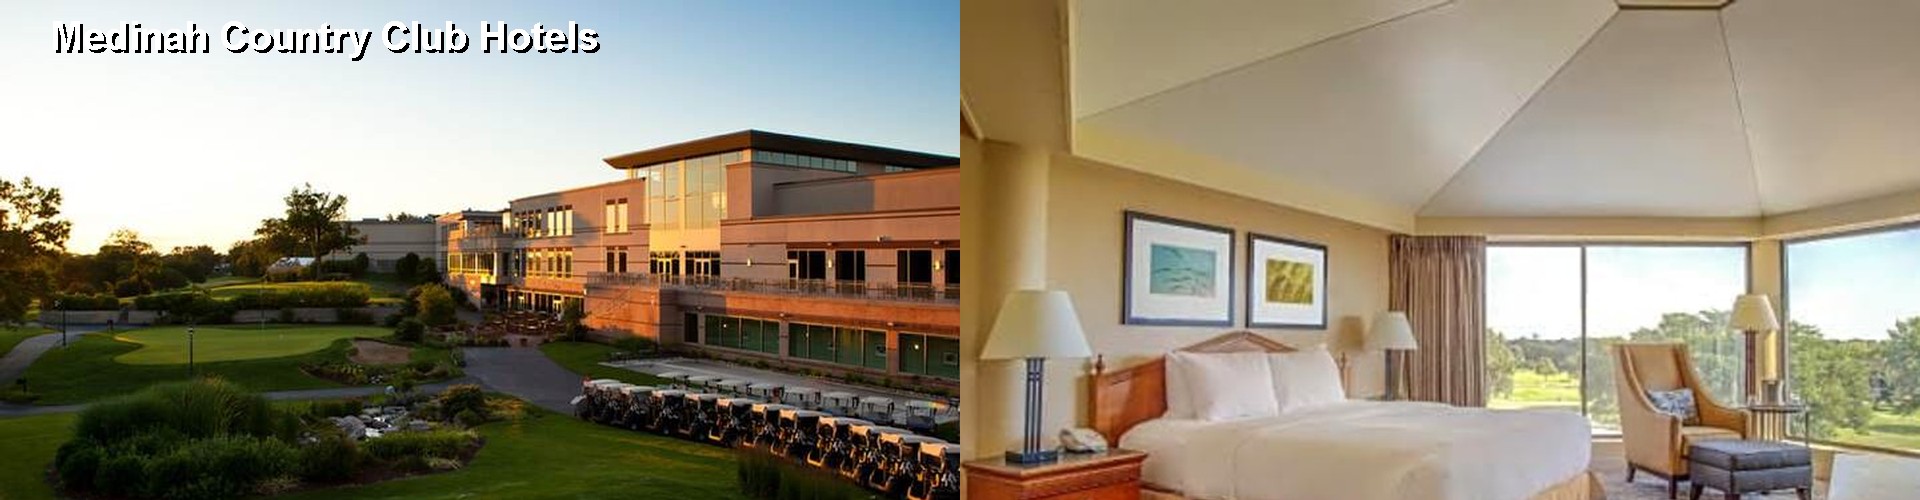 5 Best Hotels near Medinah Country Club